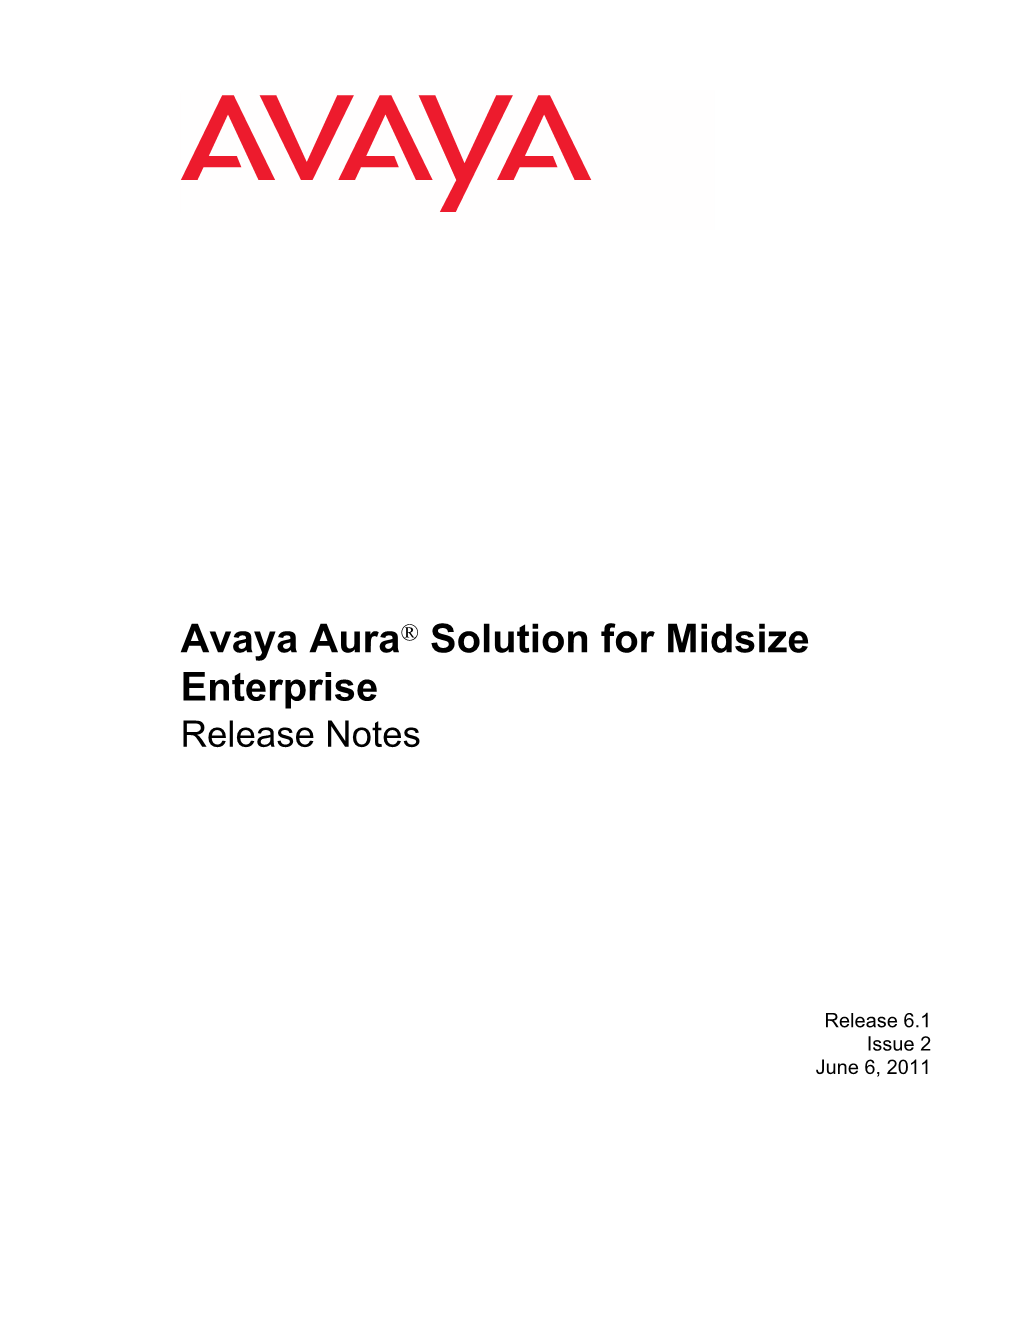 Avaya Aura® Solution for Midsize Enterprise Release Notes